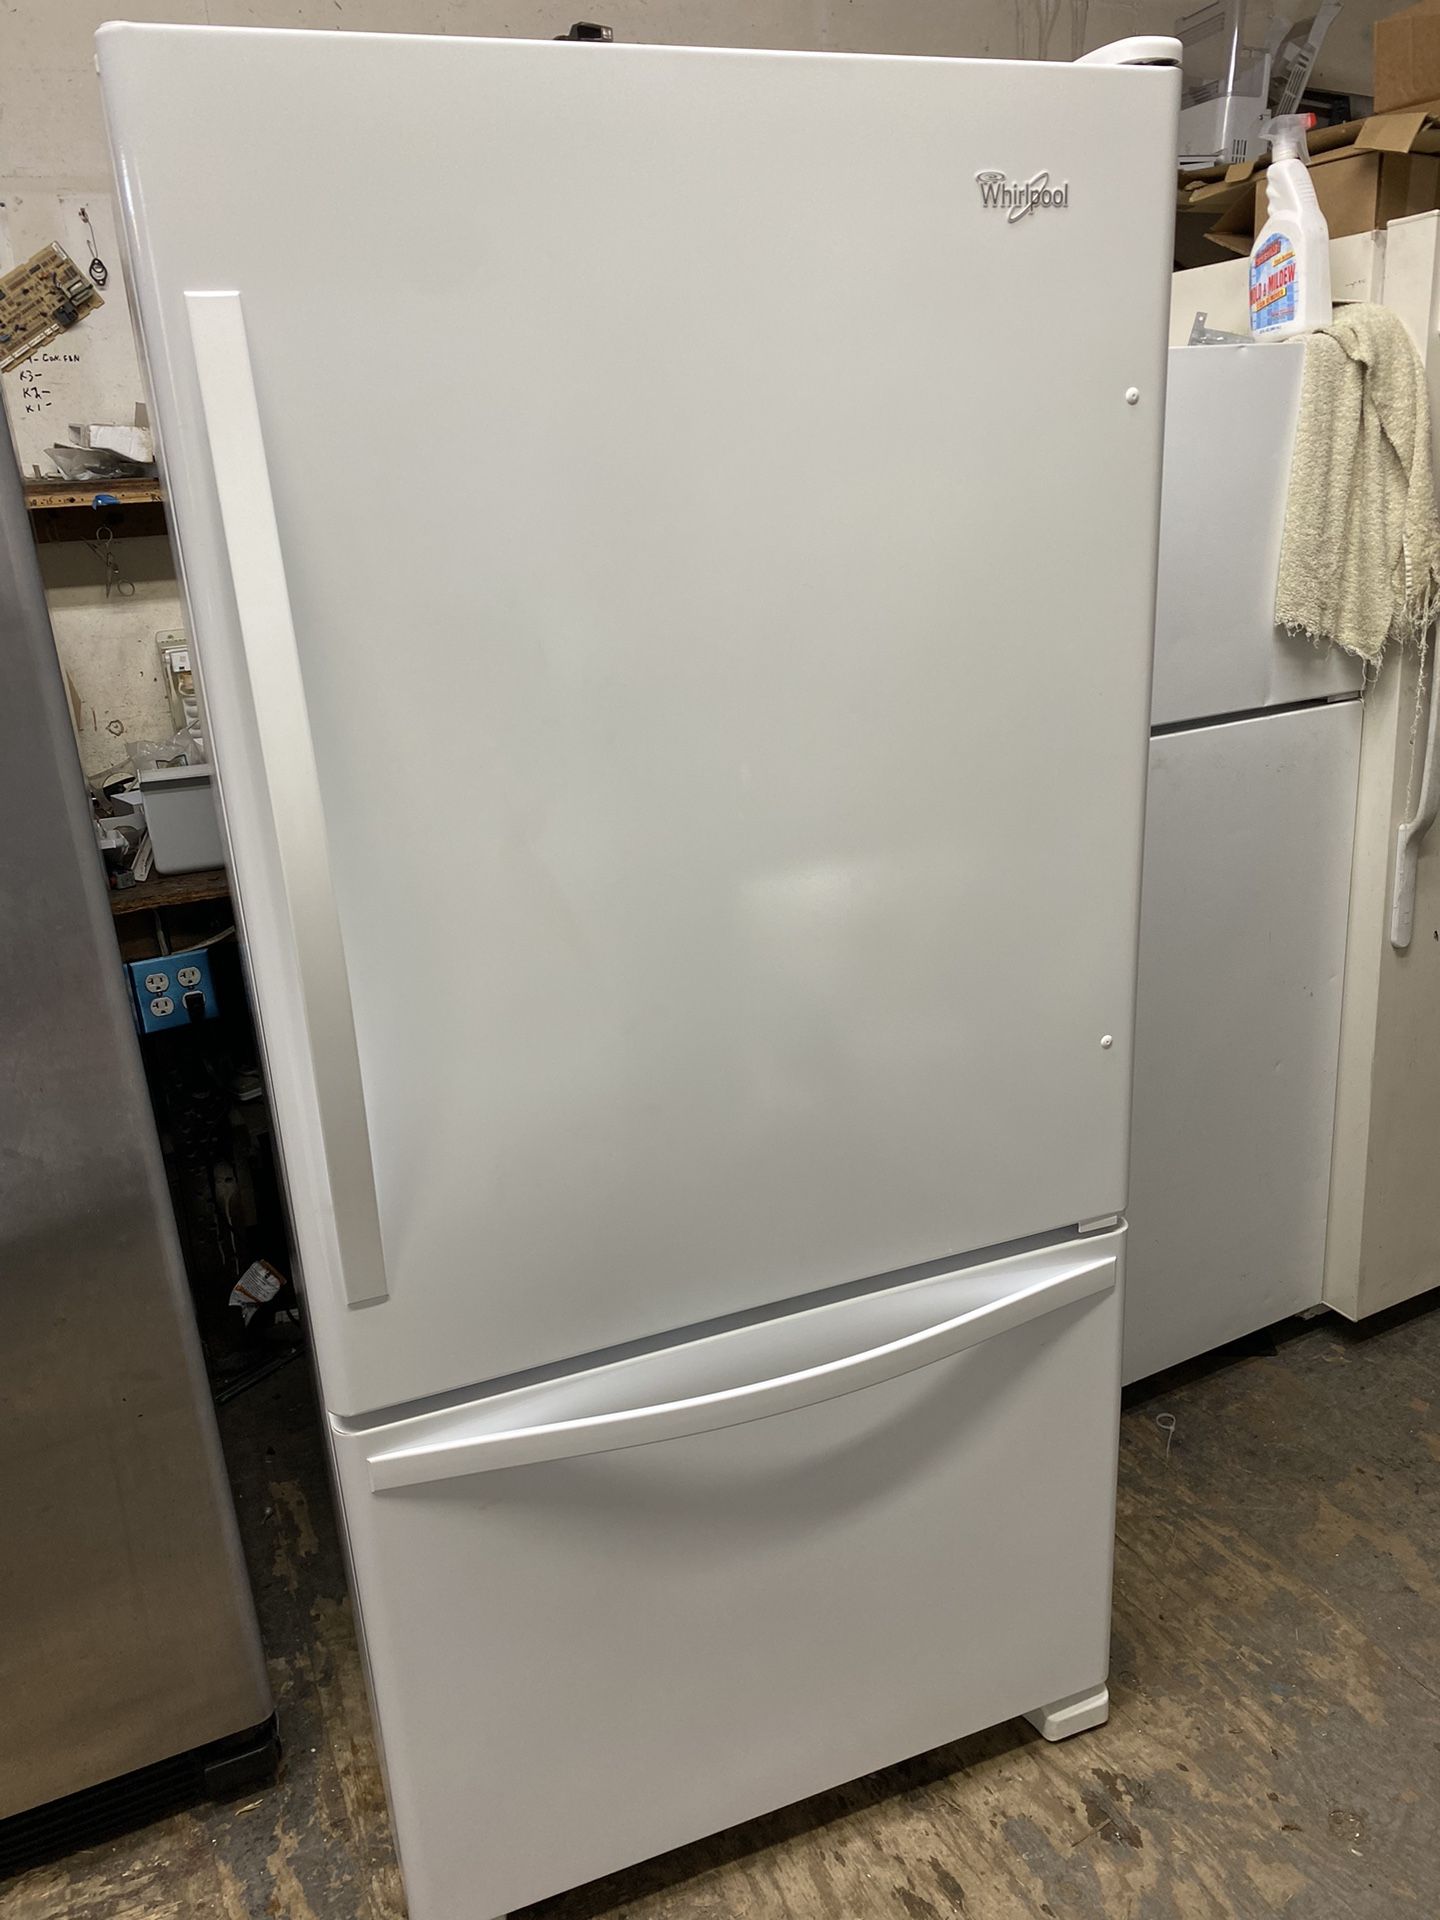 Whirlpool Bottom Freezer Refrigerator With Ice Maker